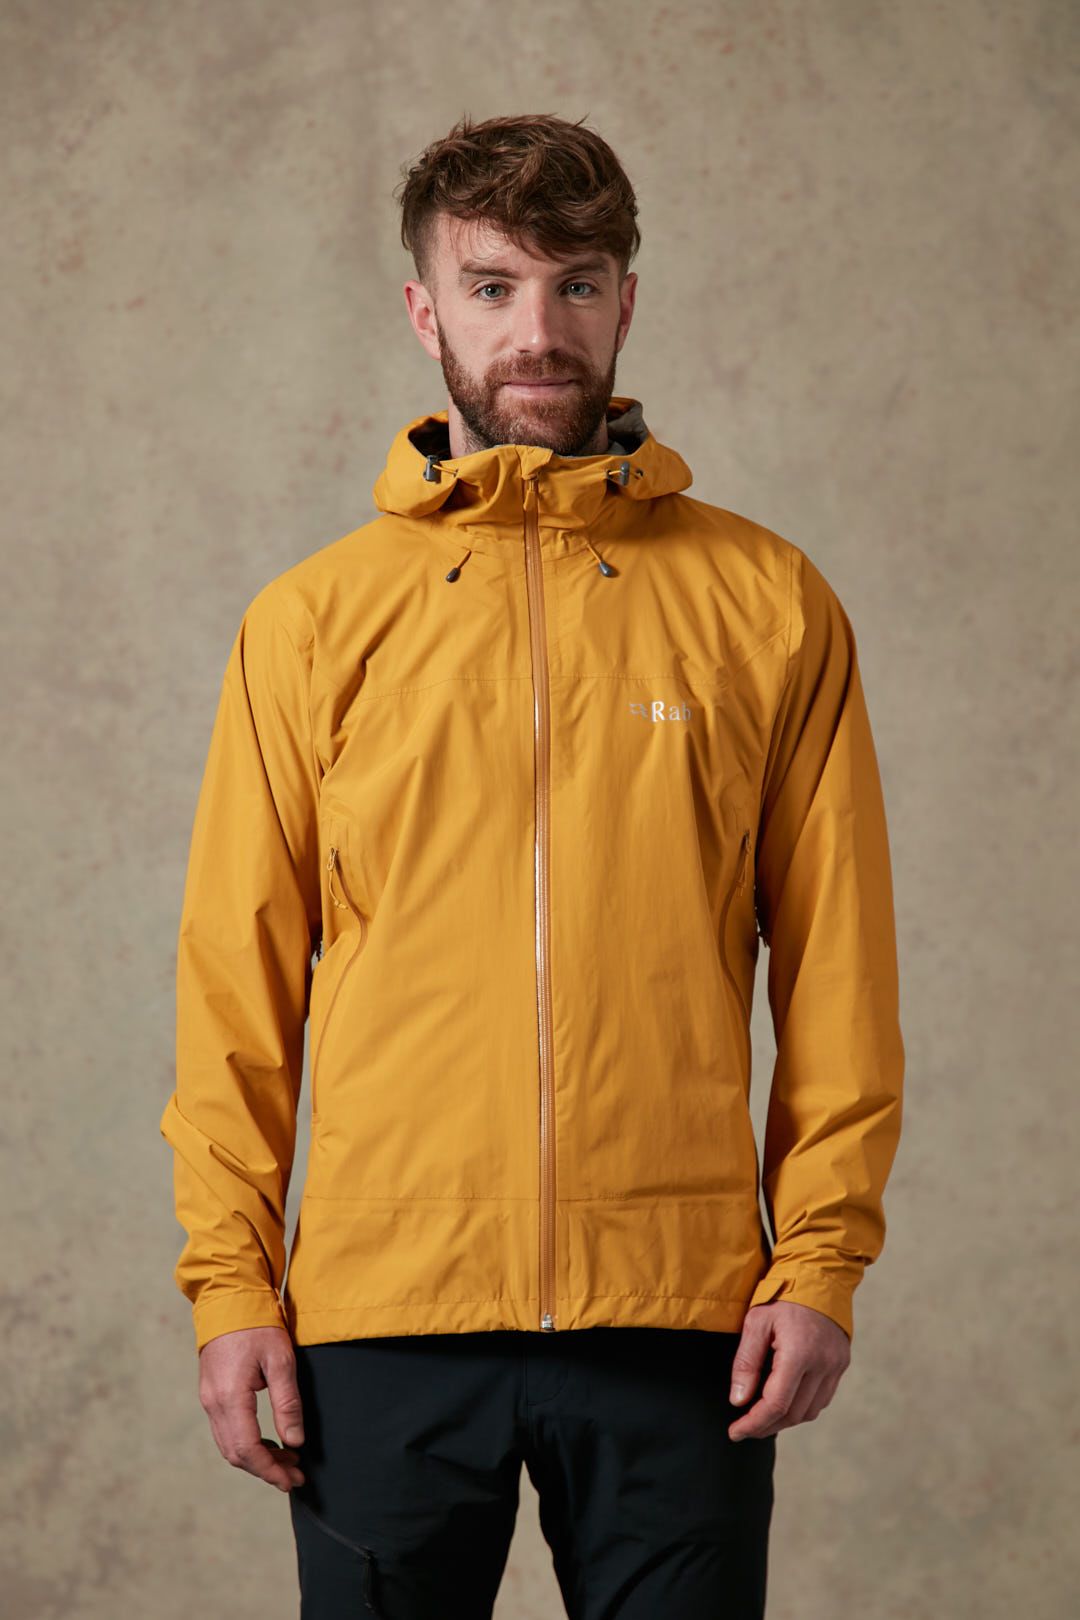 Rab Downpour Plus Jacket - Hardshell jacket - Men's